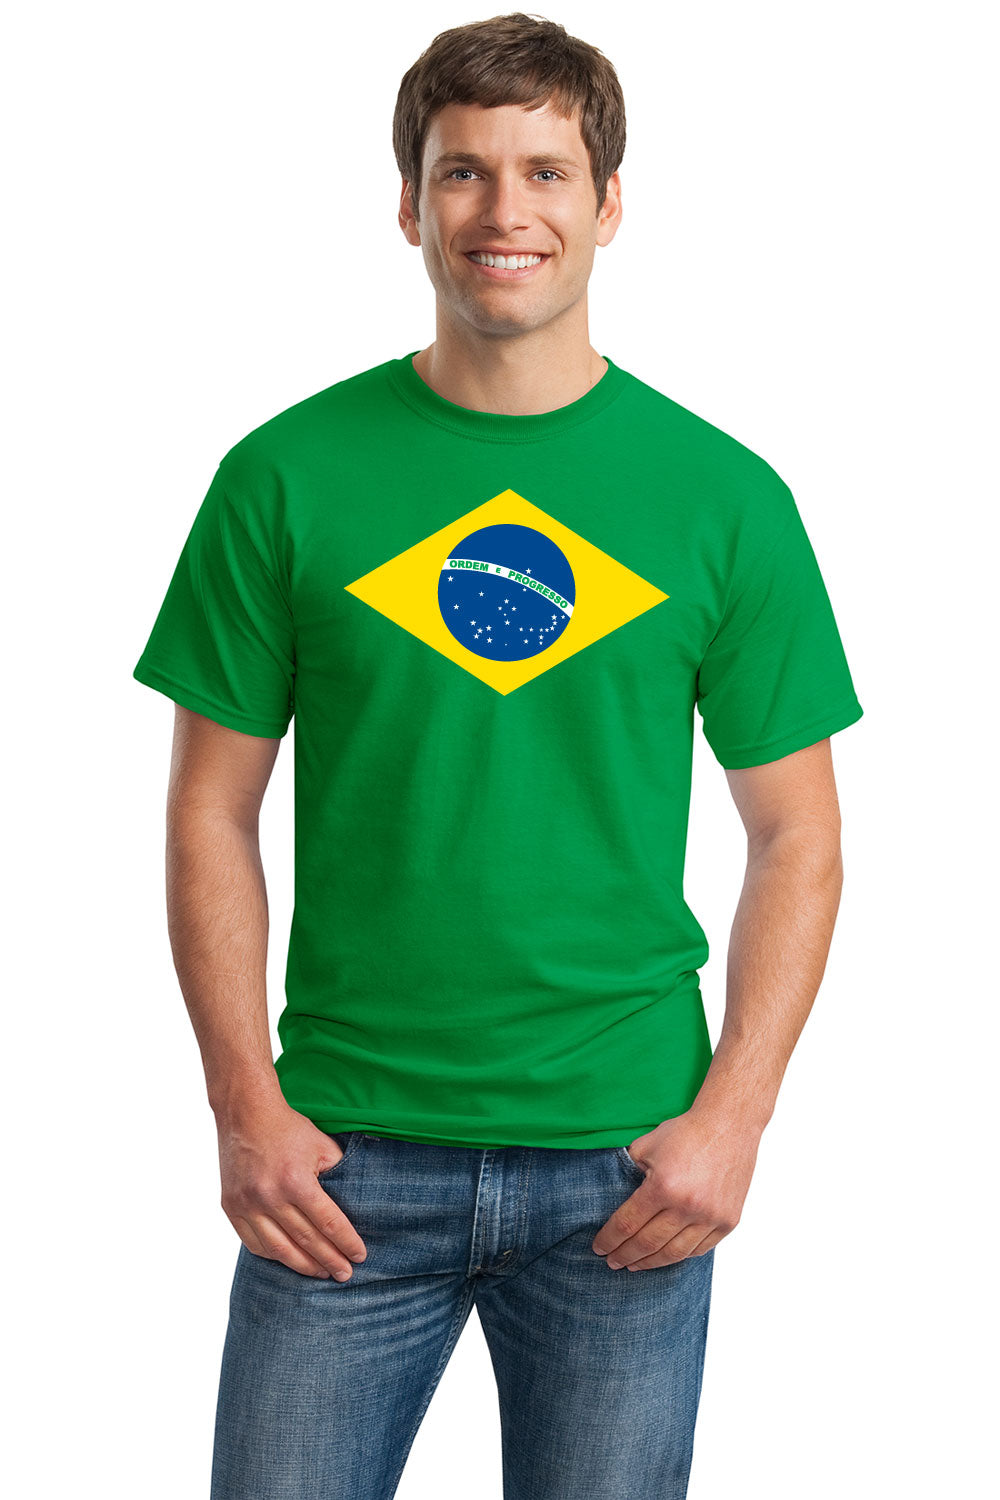 BRAZIL NATIONAL FLAG Unisex T-shirt / Bandeira do Brasil,  Brazilian-Green,Man-Small – Ann Arbor T-shirt Company